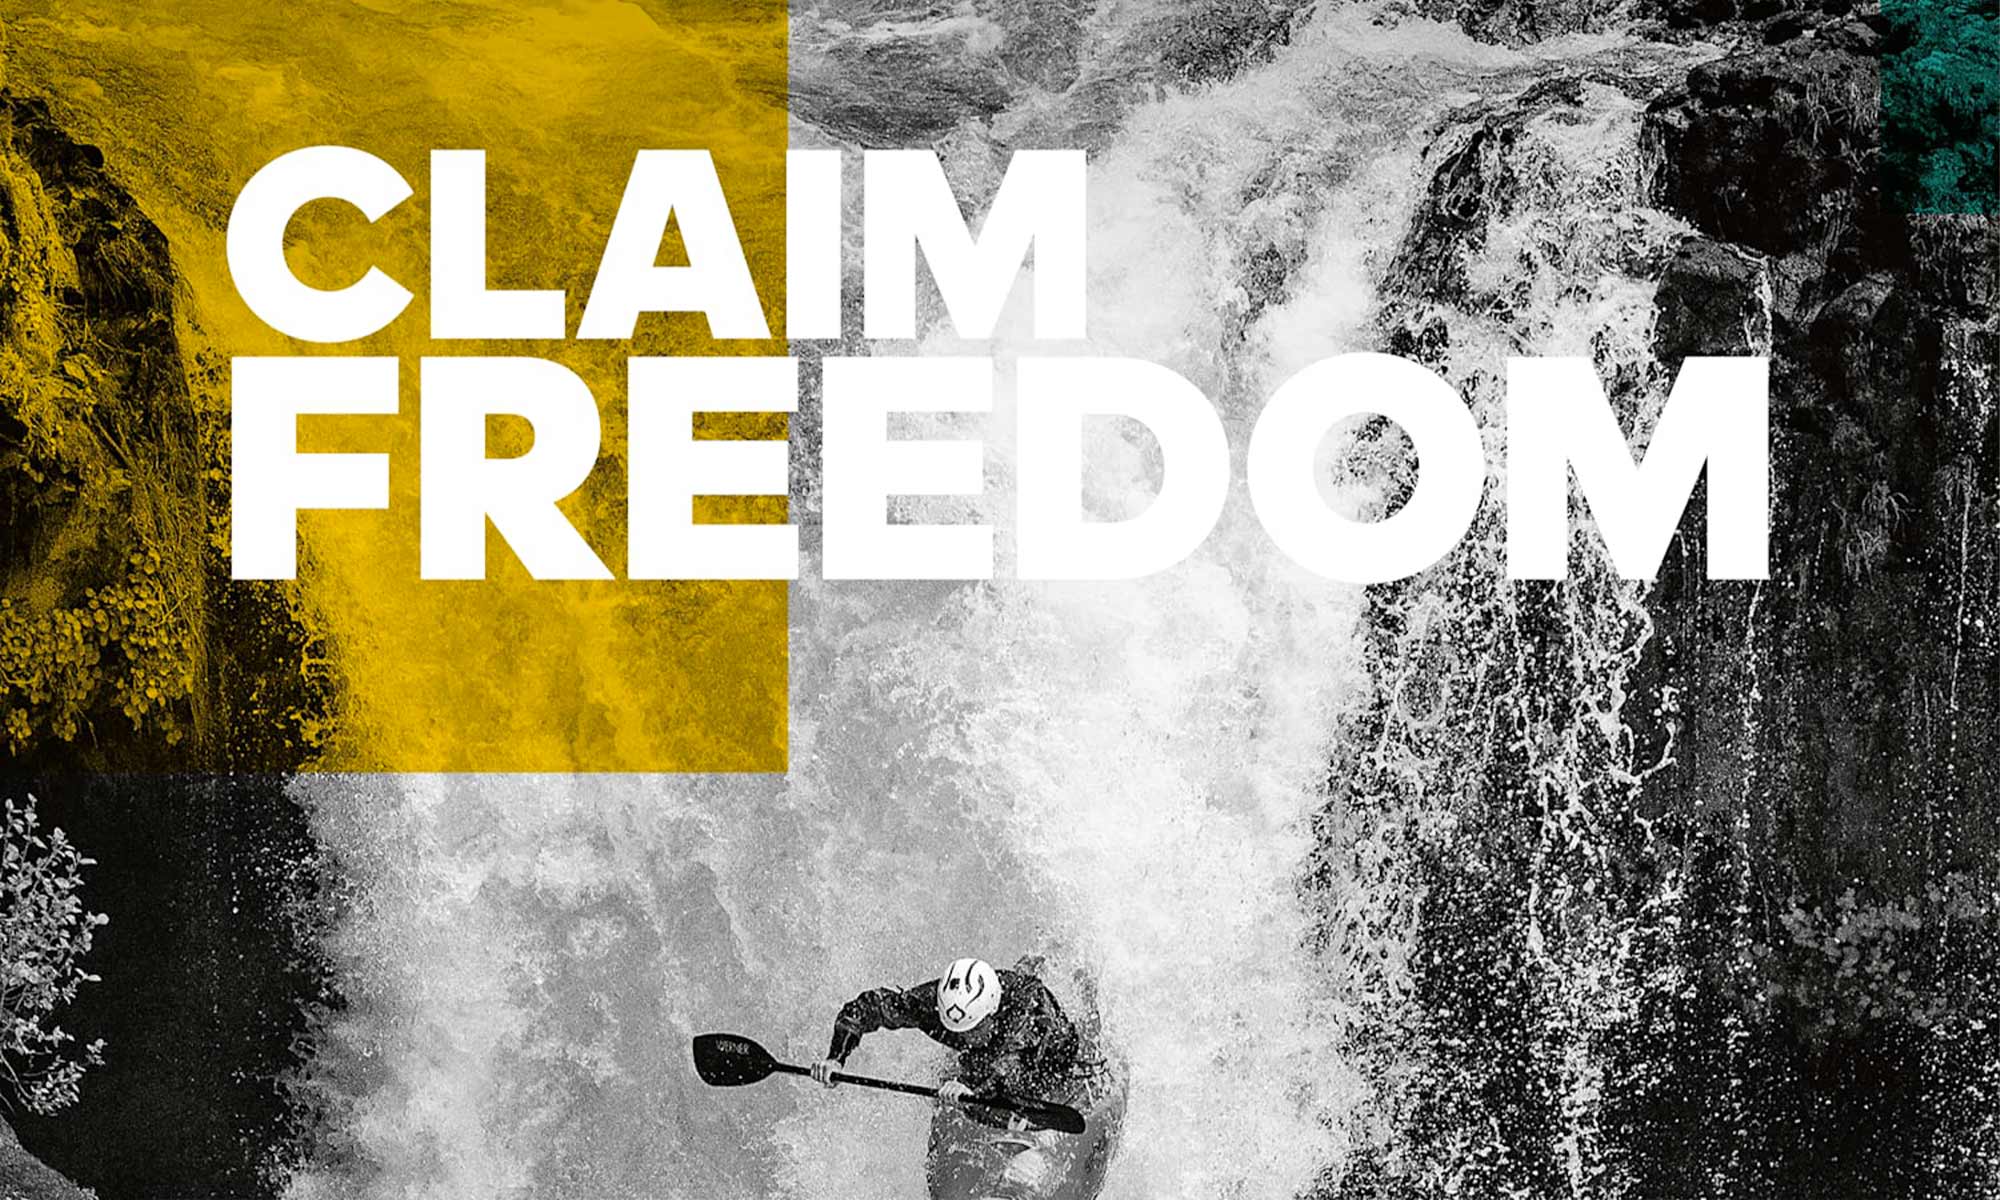 Claim freedom